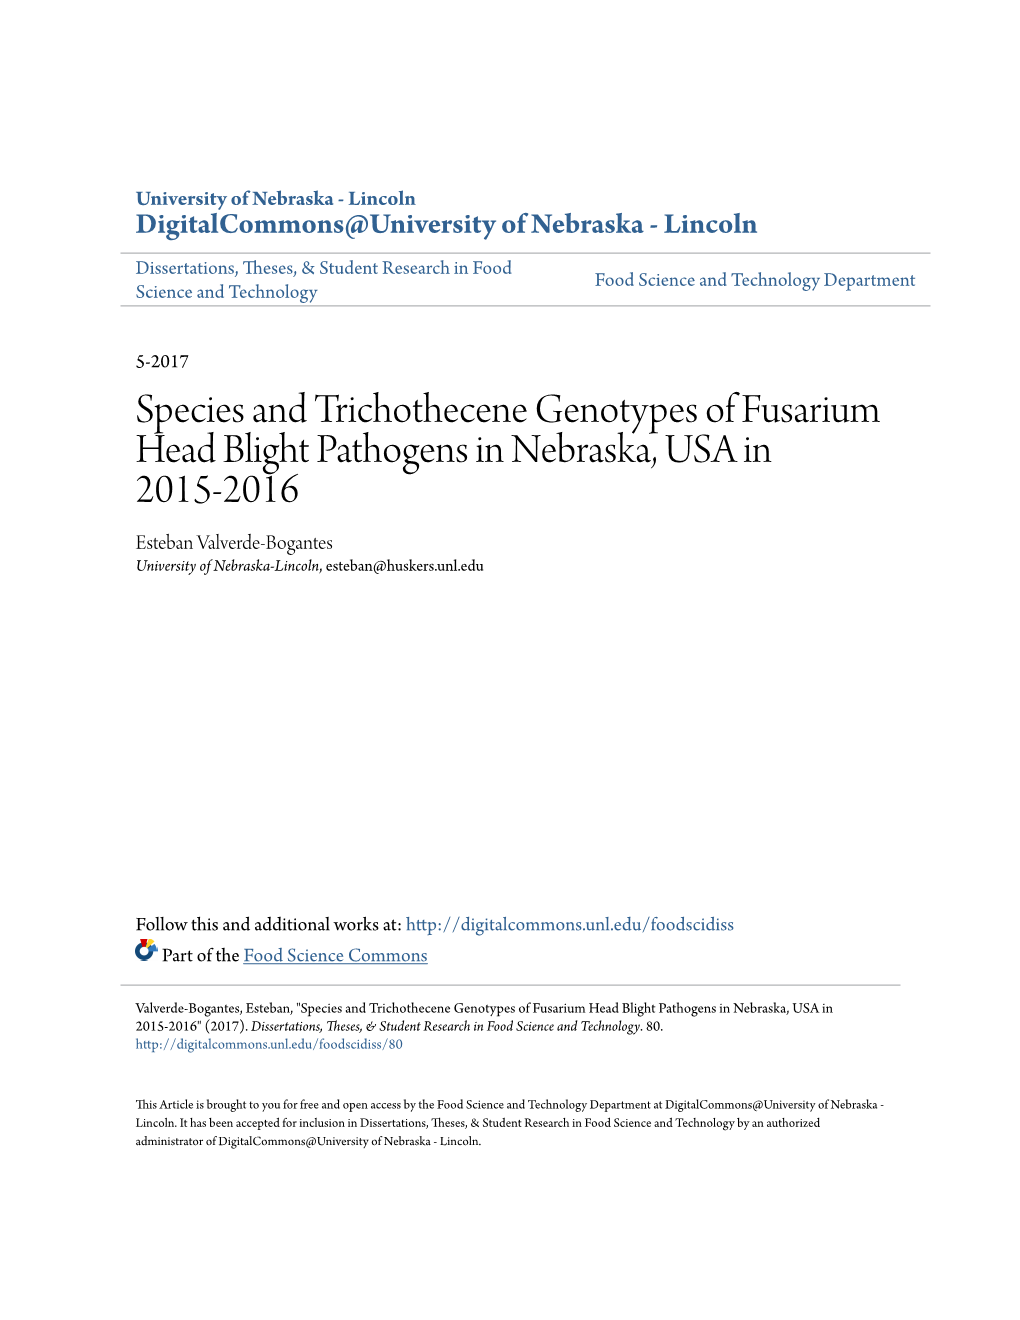 Species and Trichothecene Genotypes of Fusarium Head Blight